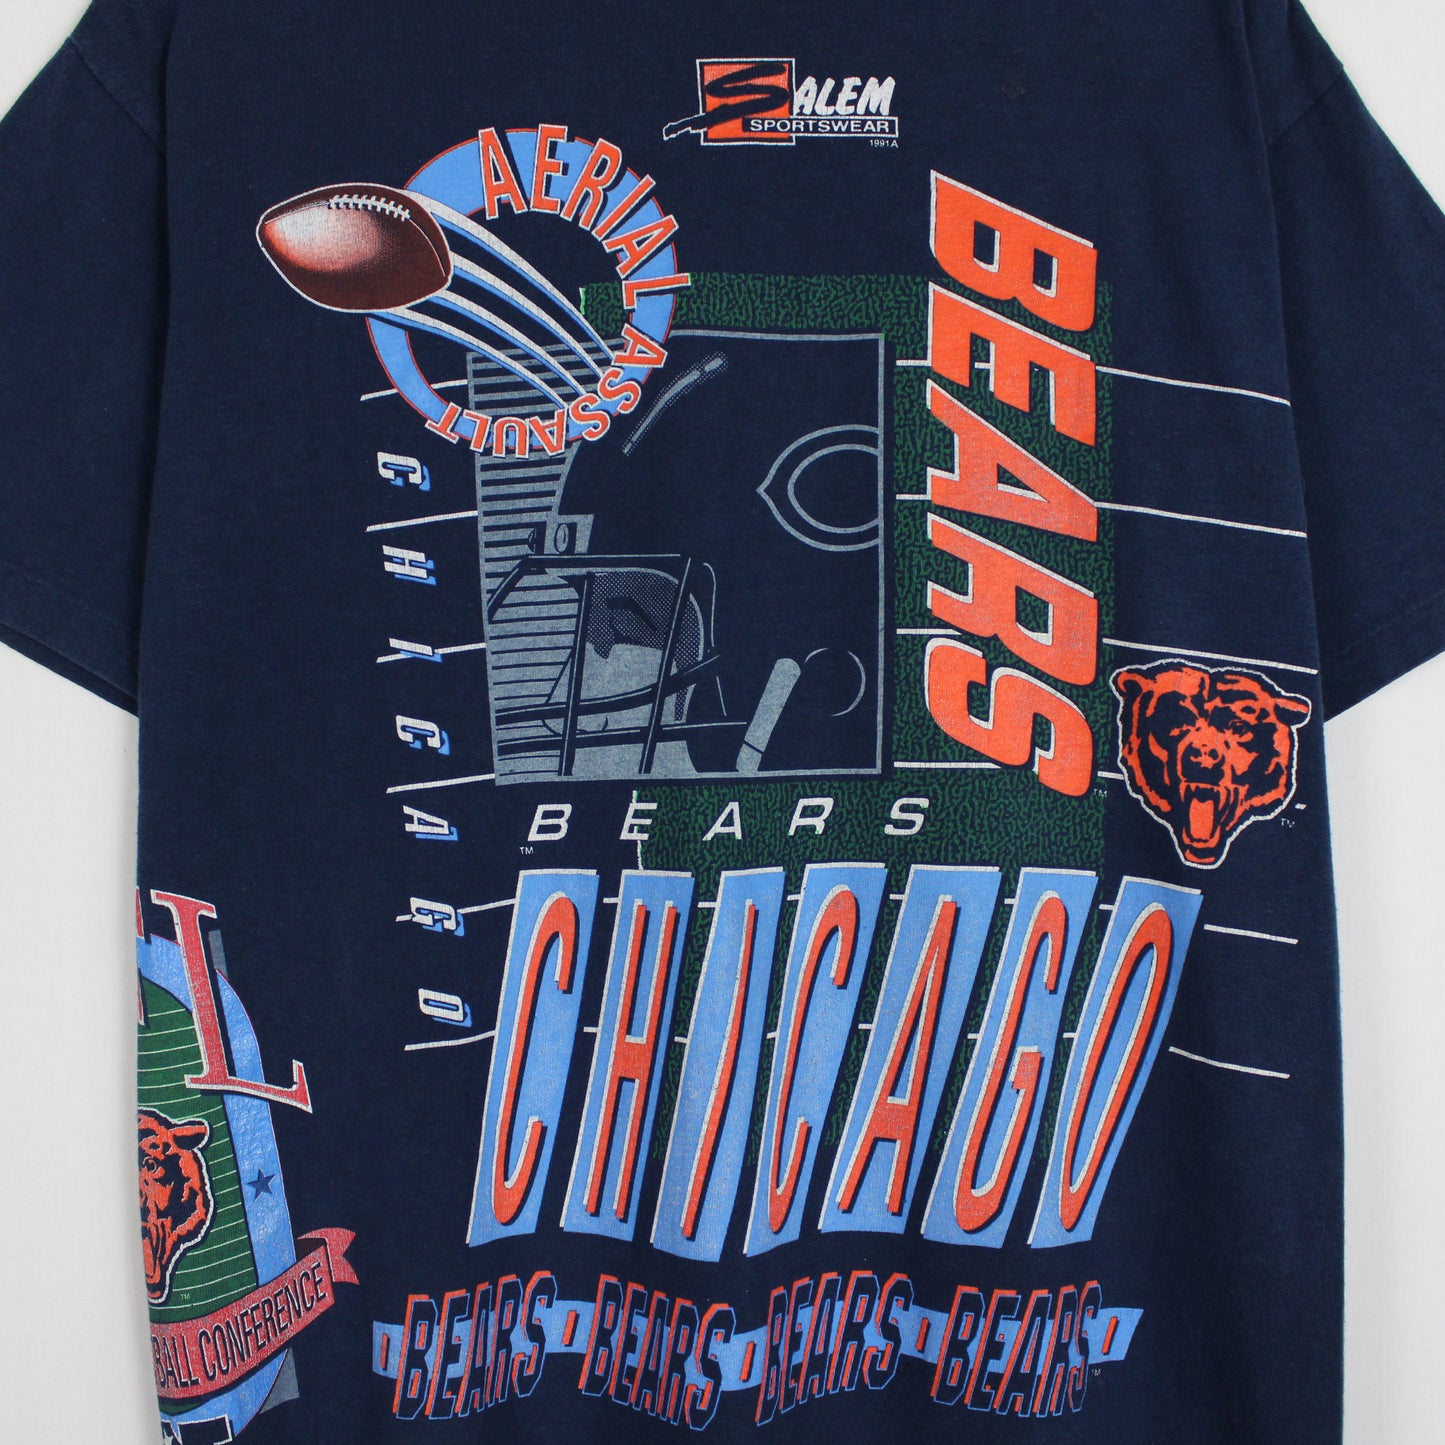 Vintage 1993 Chicago Bears NFL Tee - L